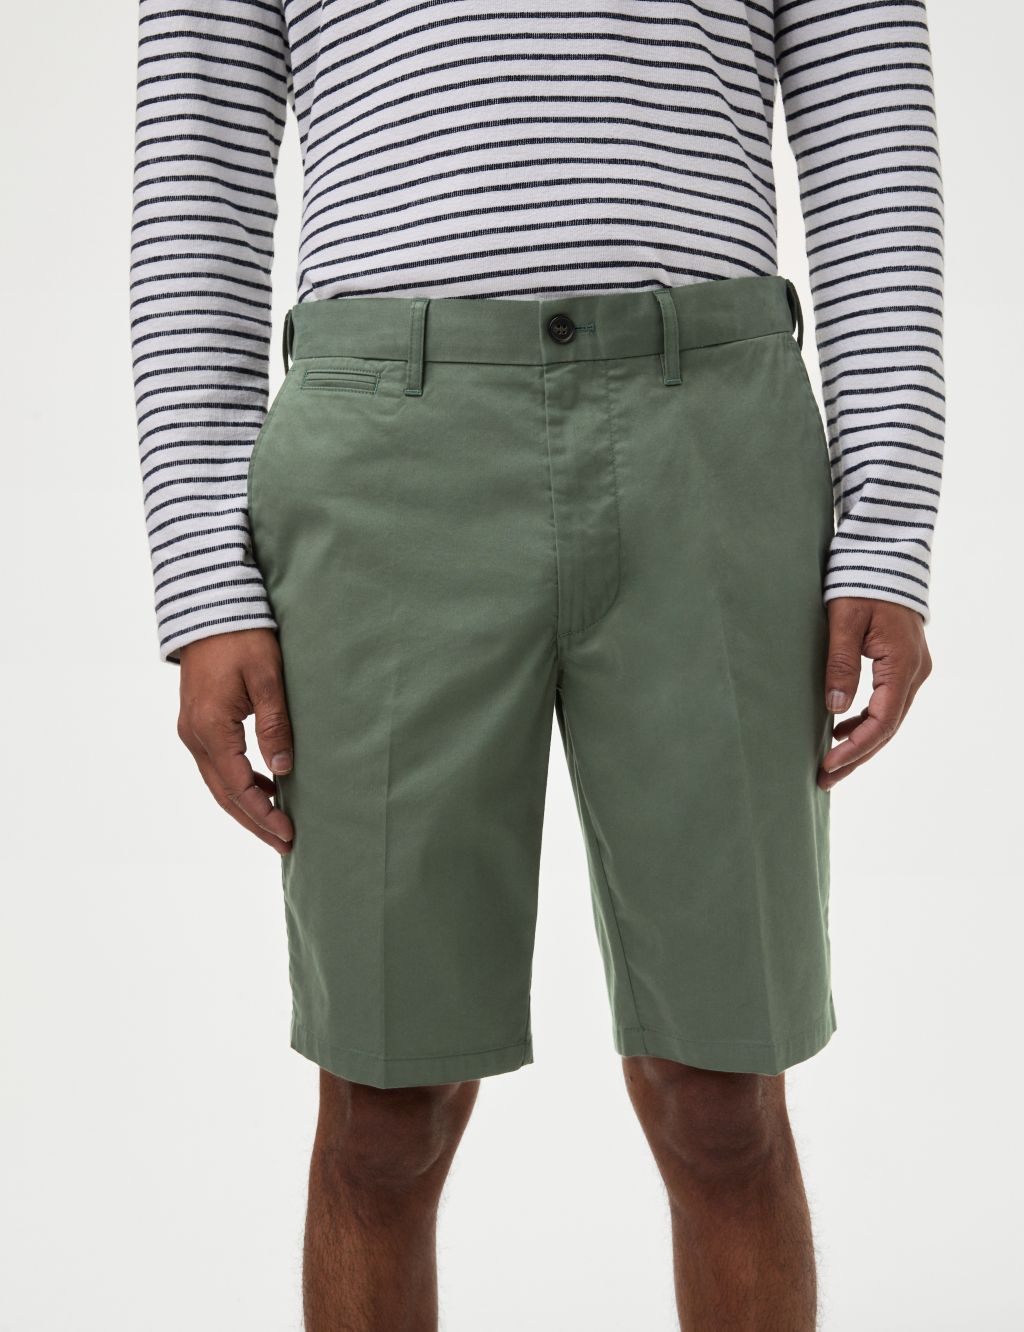 Street Shorts - Olive Green Heavy Fleece